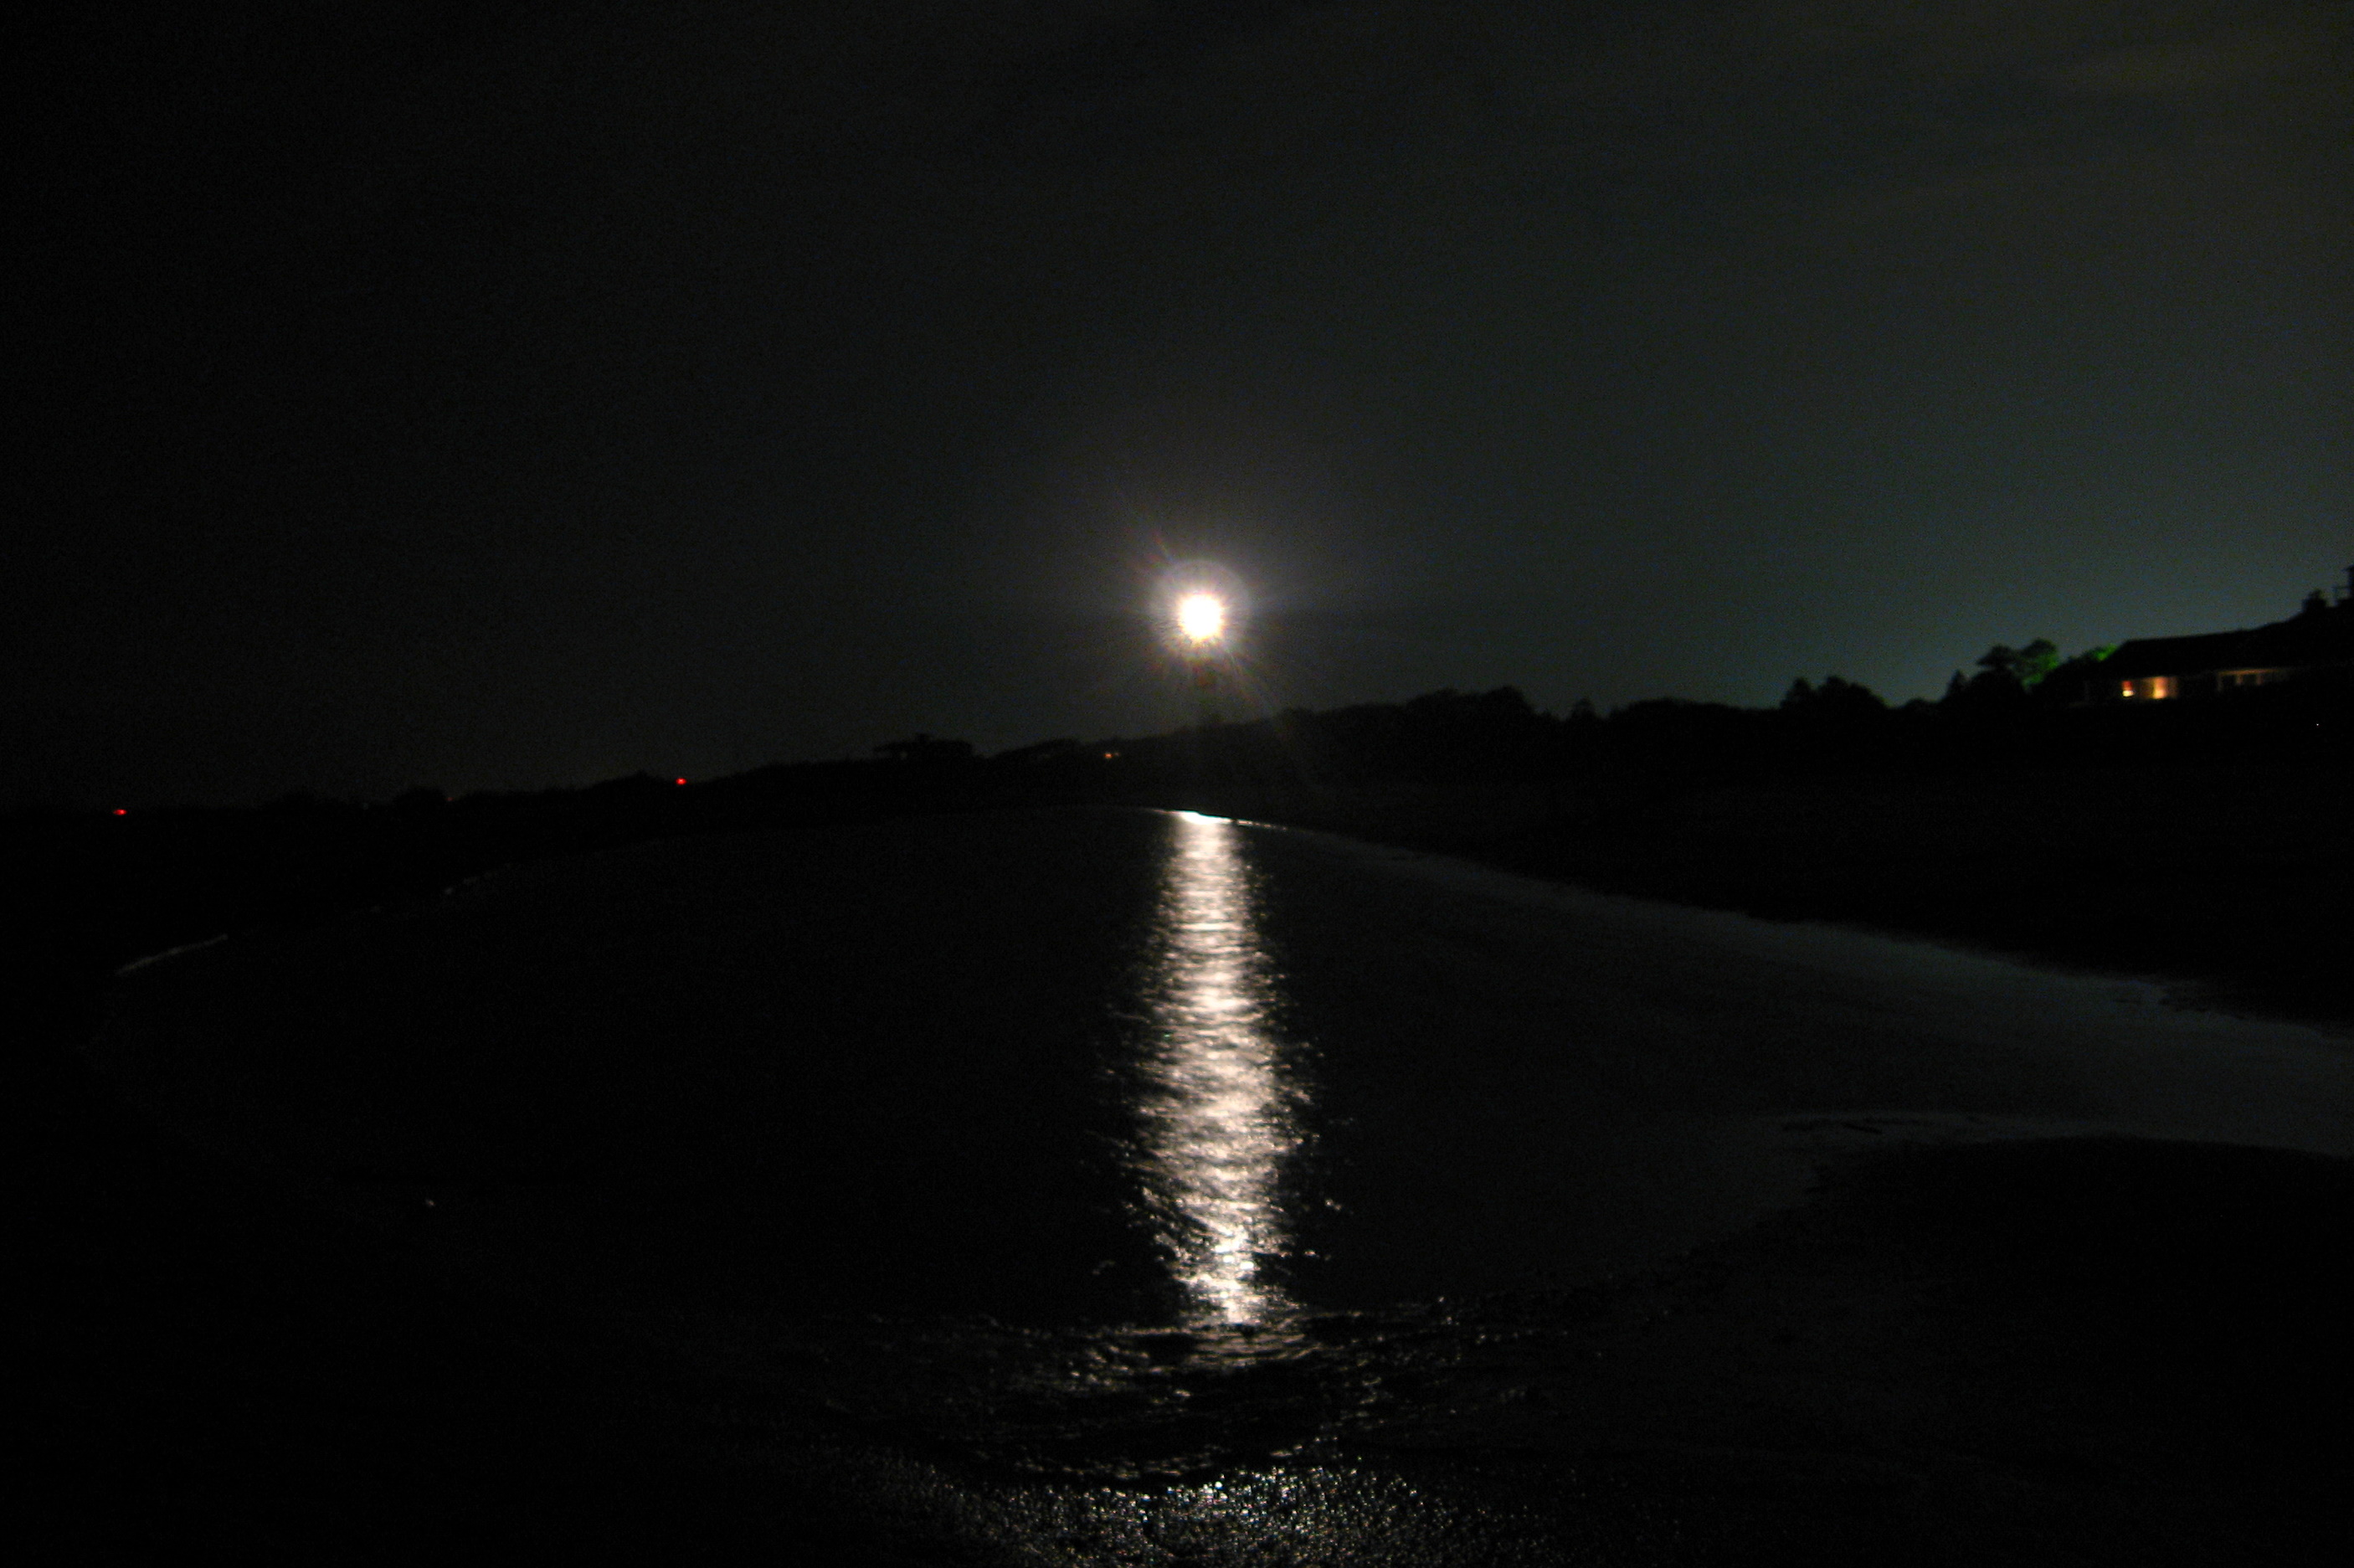 File:Sullivans-Island-Lighthouse-beach-night.jpg - Wikimedia Commons